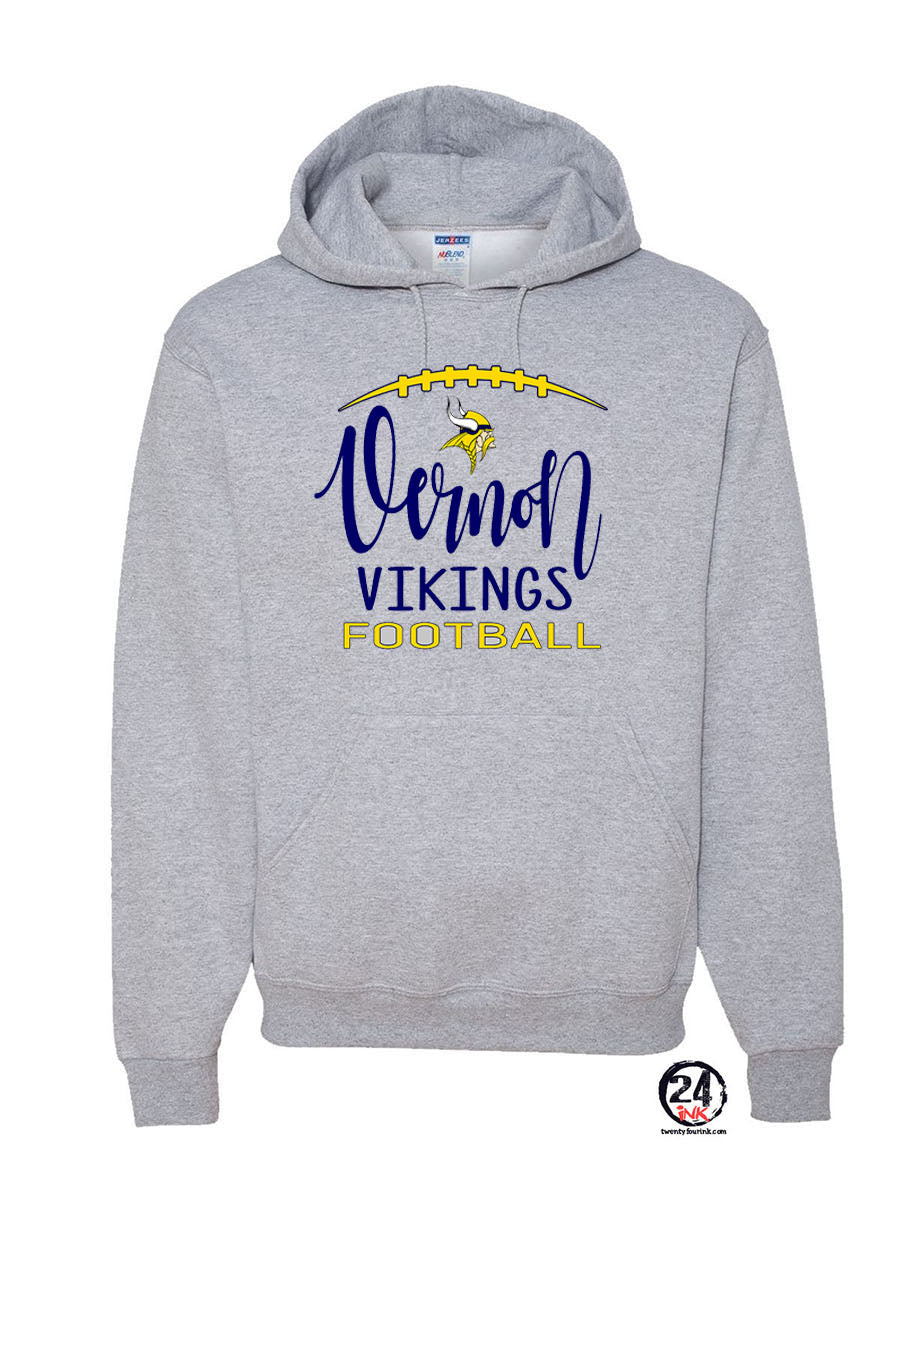 Vernon Football Design 4 Hooded Sweatshirt